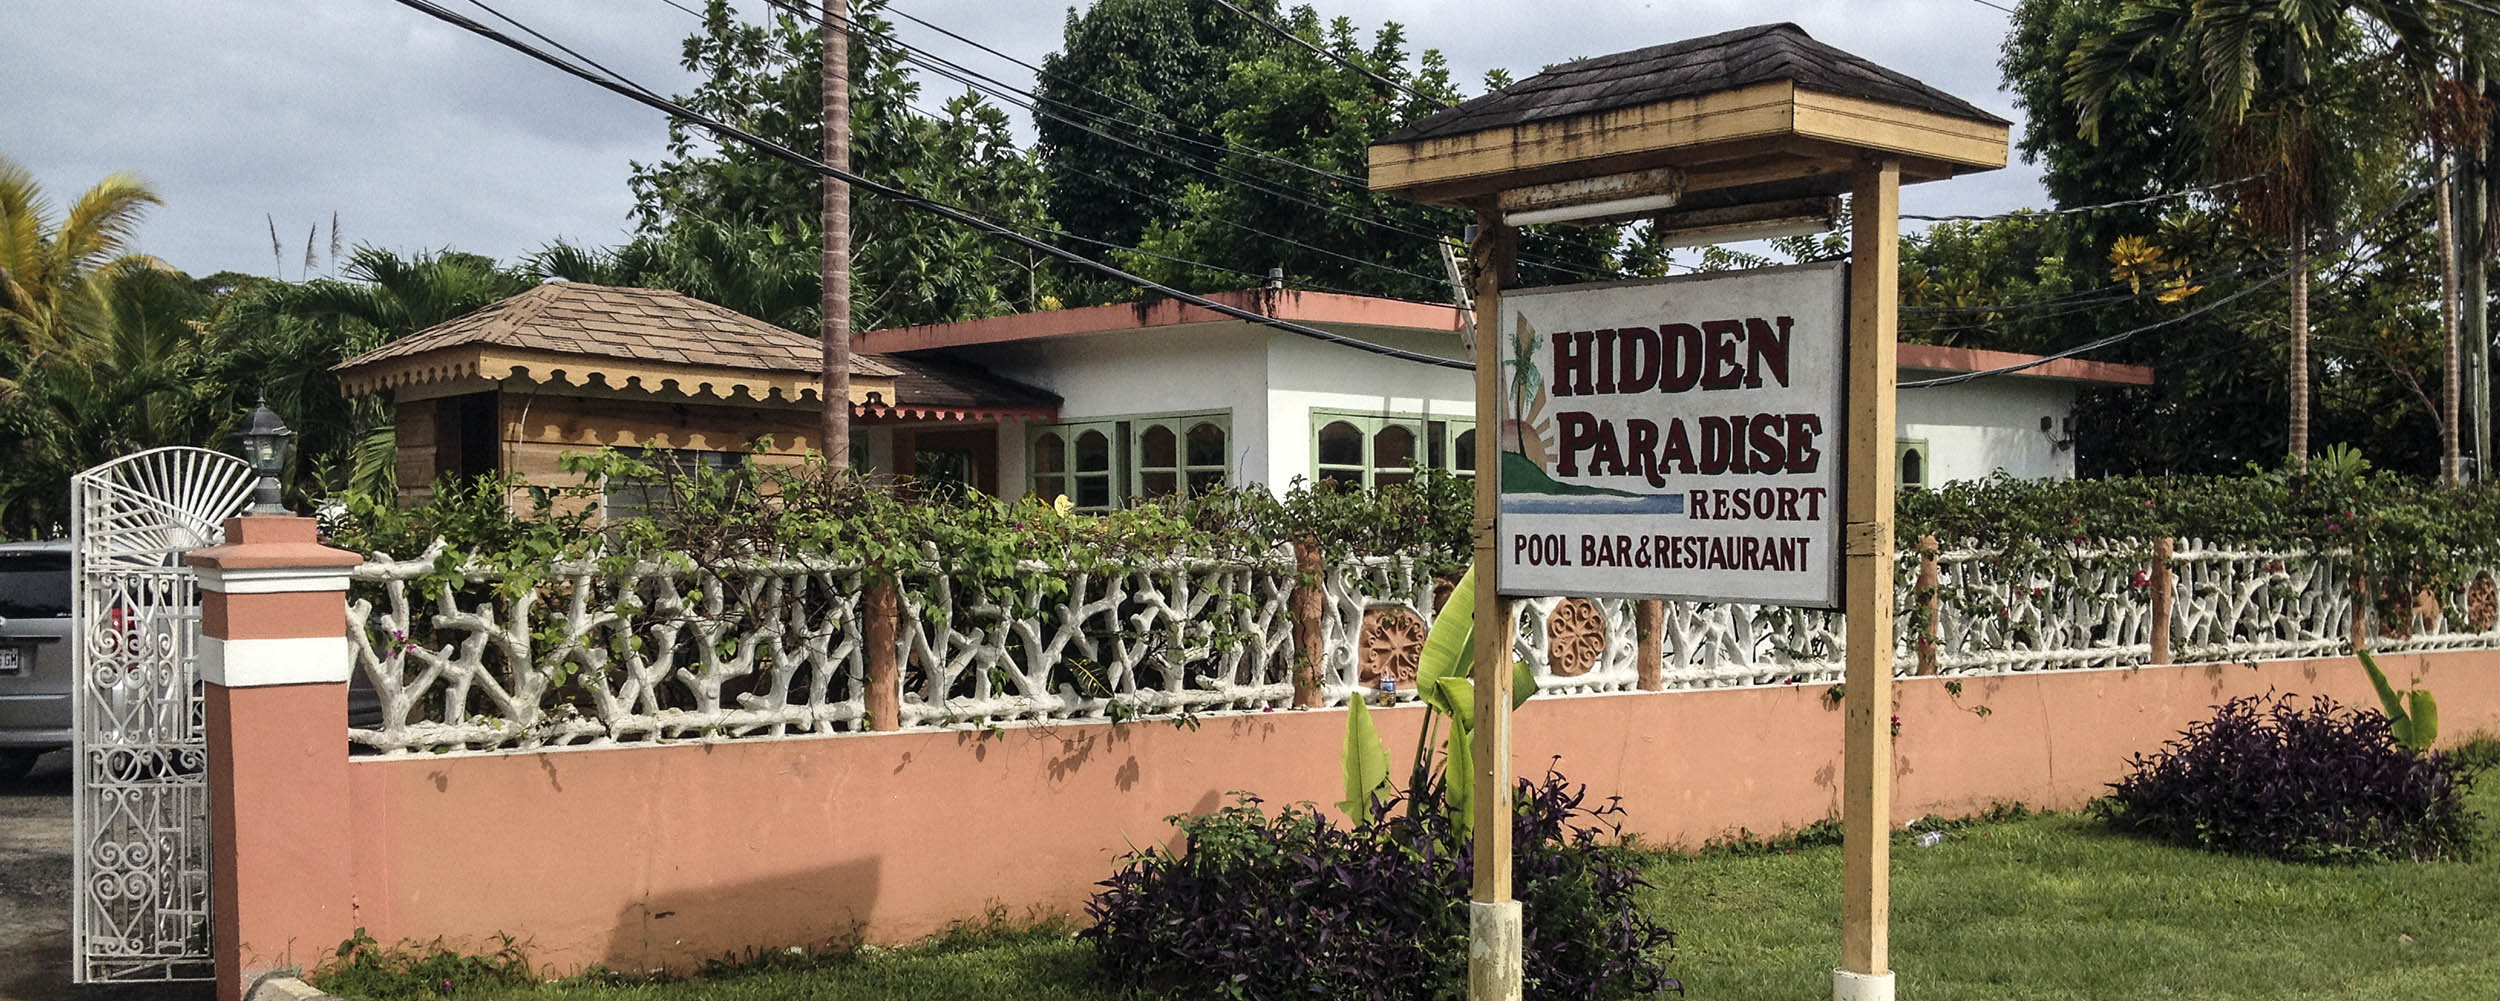 Hidden Paradise Resort - Negril Jamaica